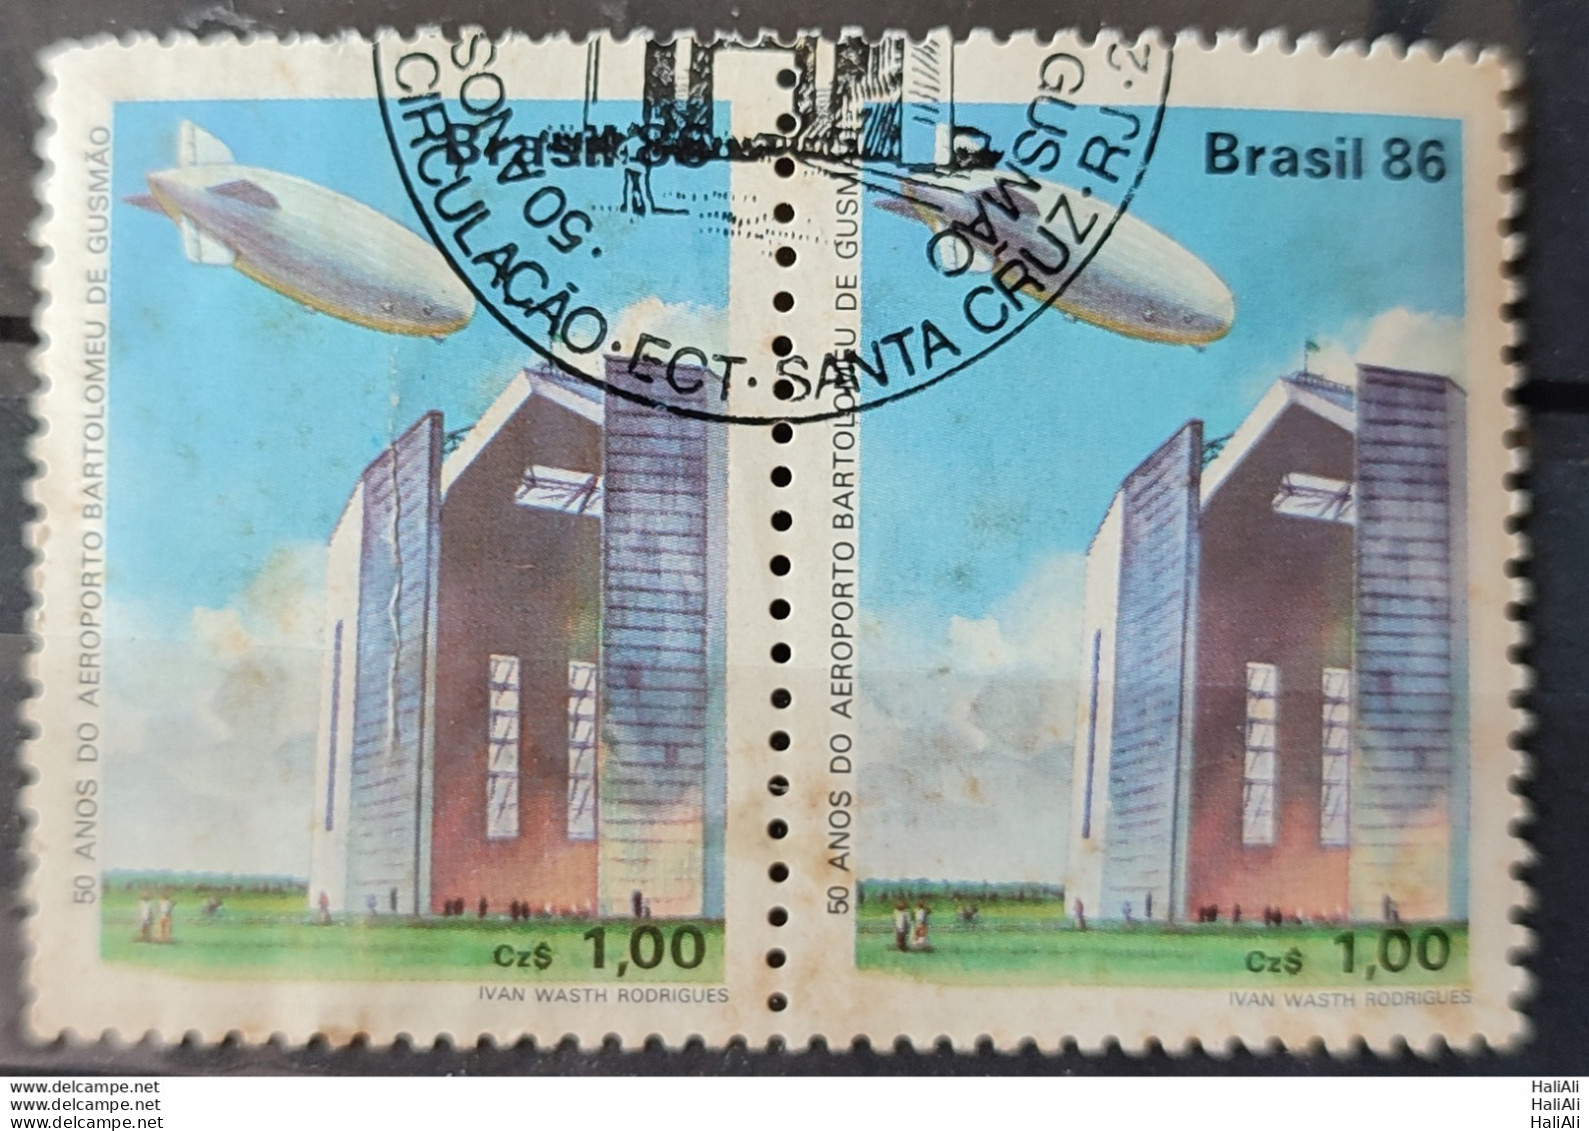 C 1541 Brazil Stamp 50 Years Airport Bartolomeu De Gusmao Balloon Hangar 1986 Dupla Circulated 2 - Usados